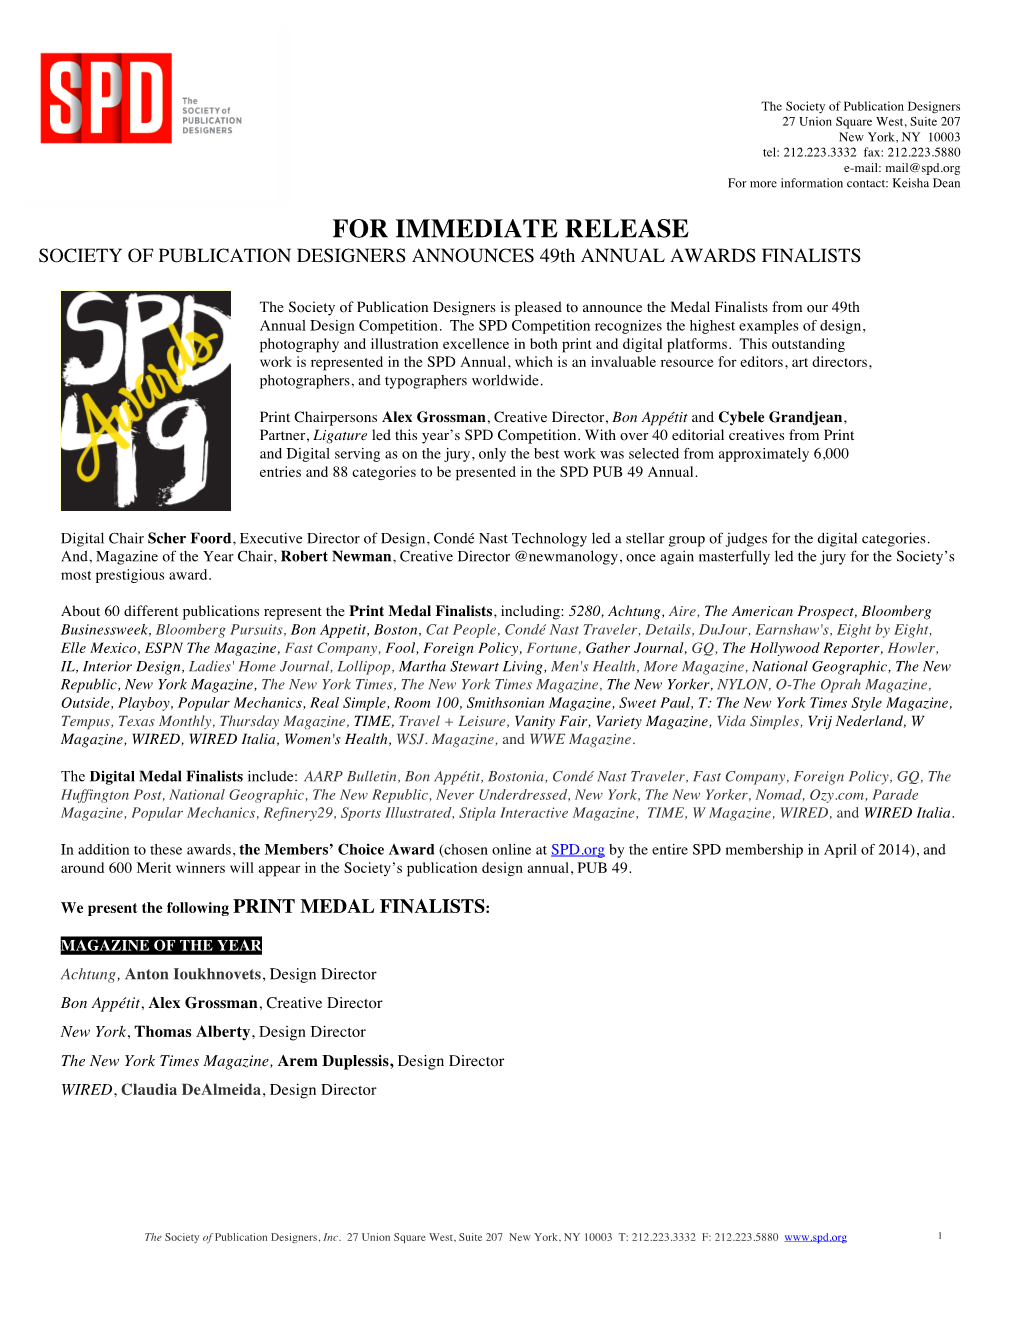 SPD 49 MEDAL FINALISTS Press Release 4-17-14